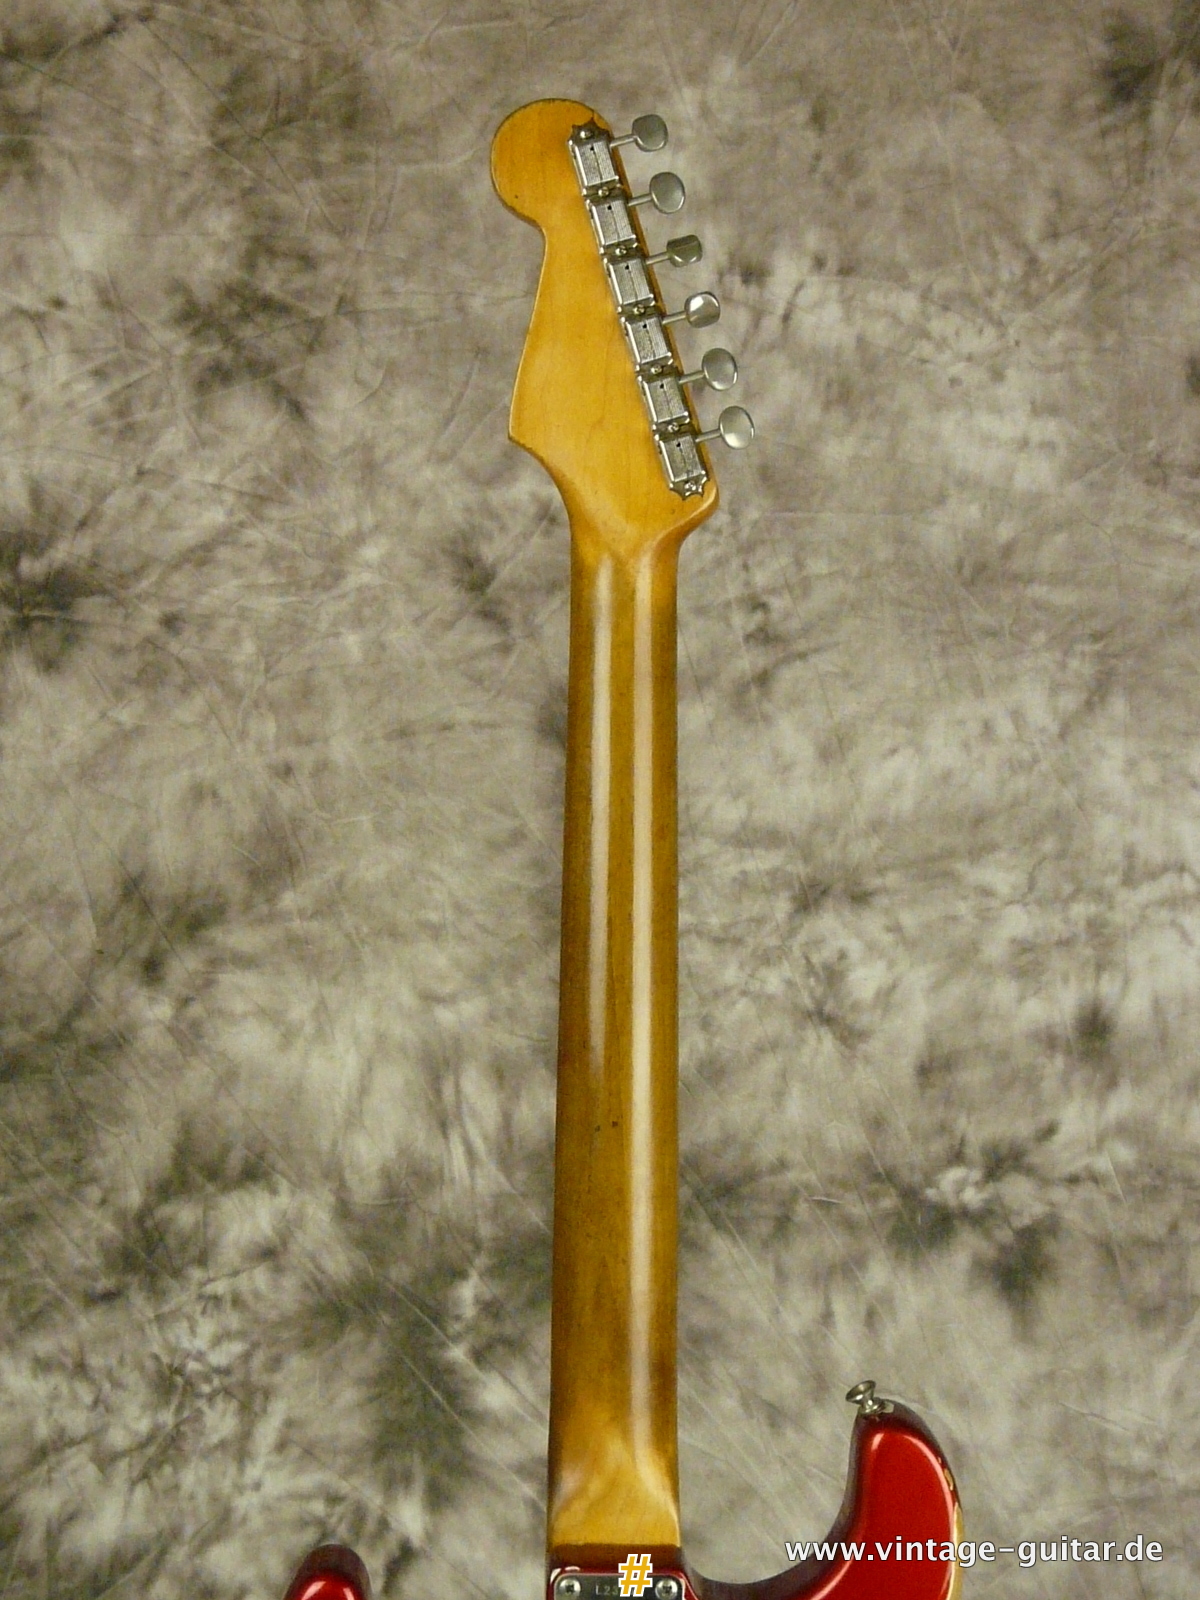 Fender_Stratocaster_candy-apple-red-1964-009.JPG